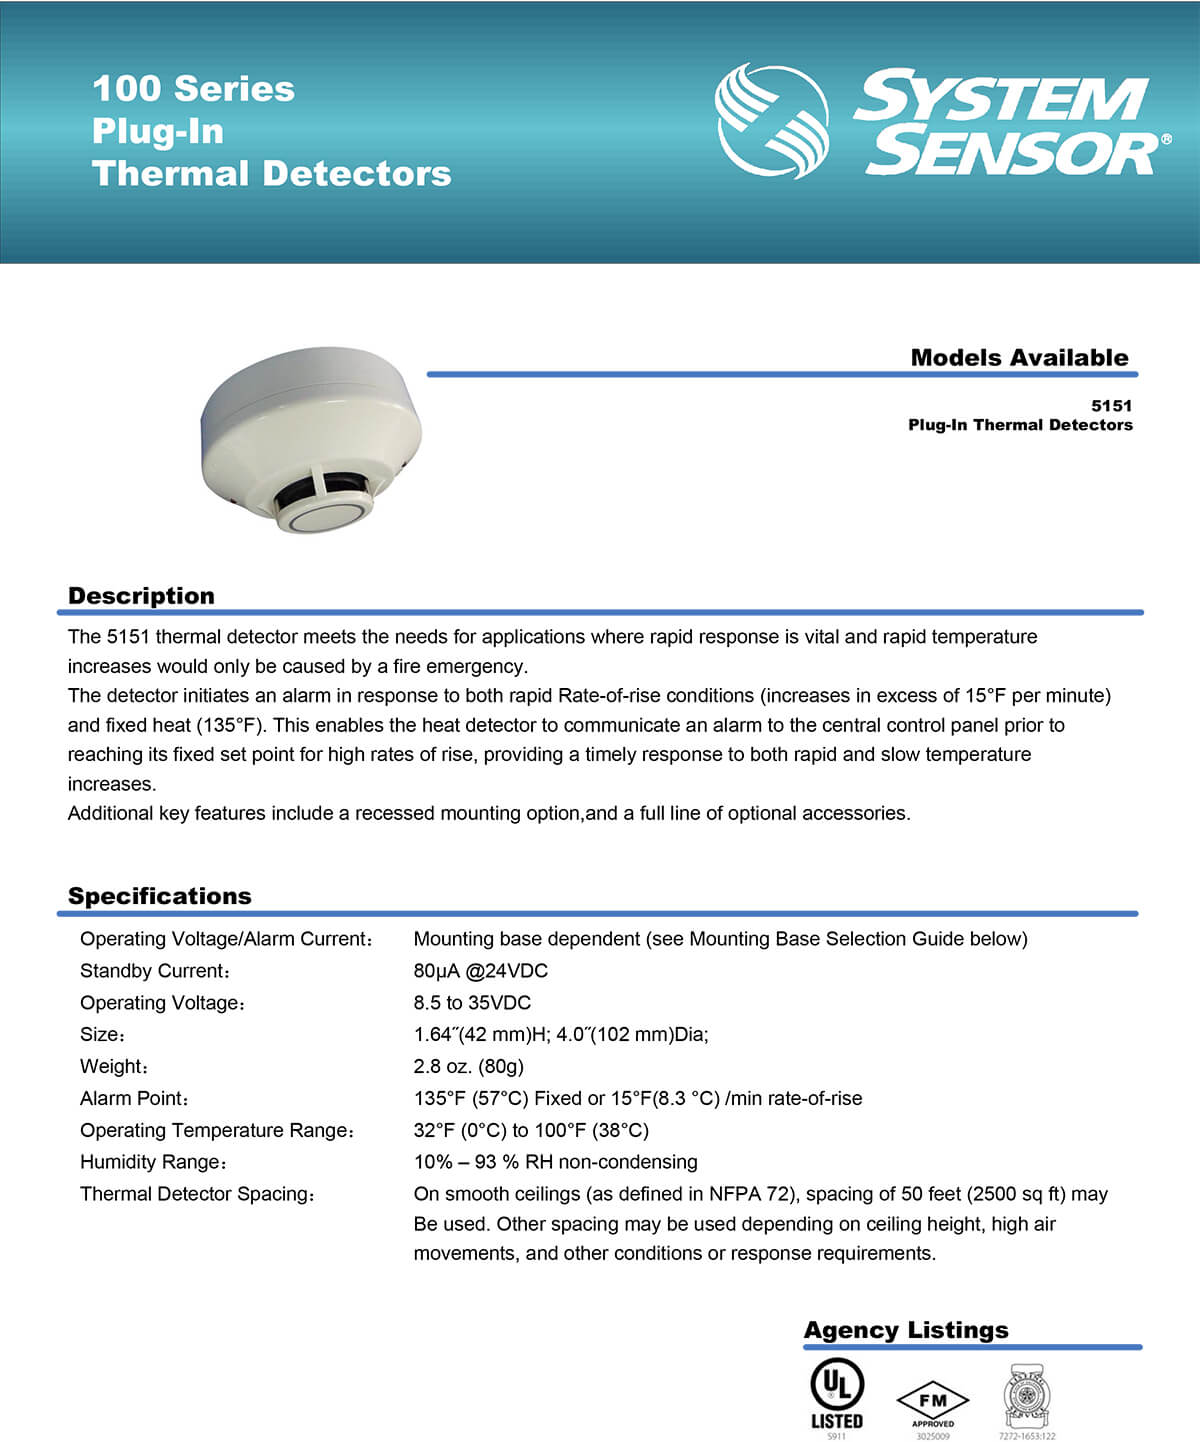 Plug-In Thermal Detectors 100 Series